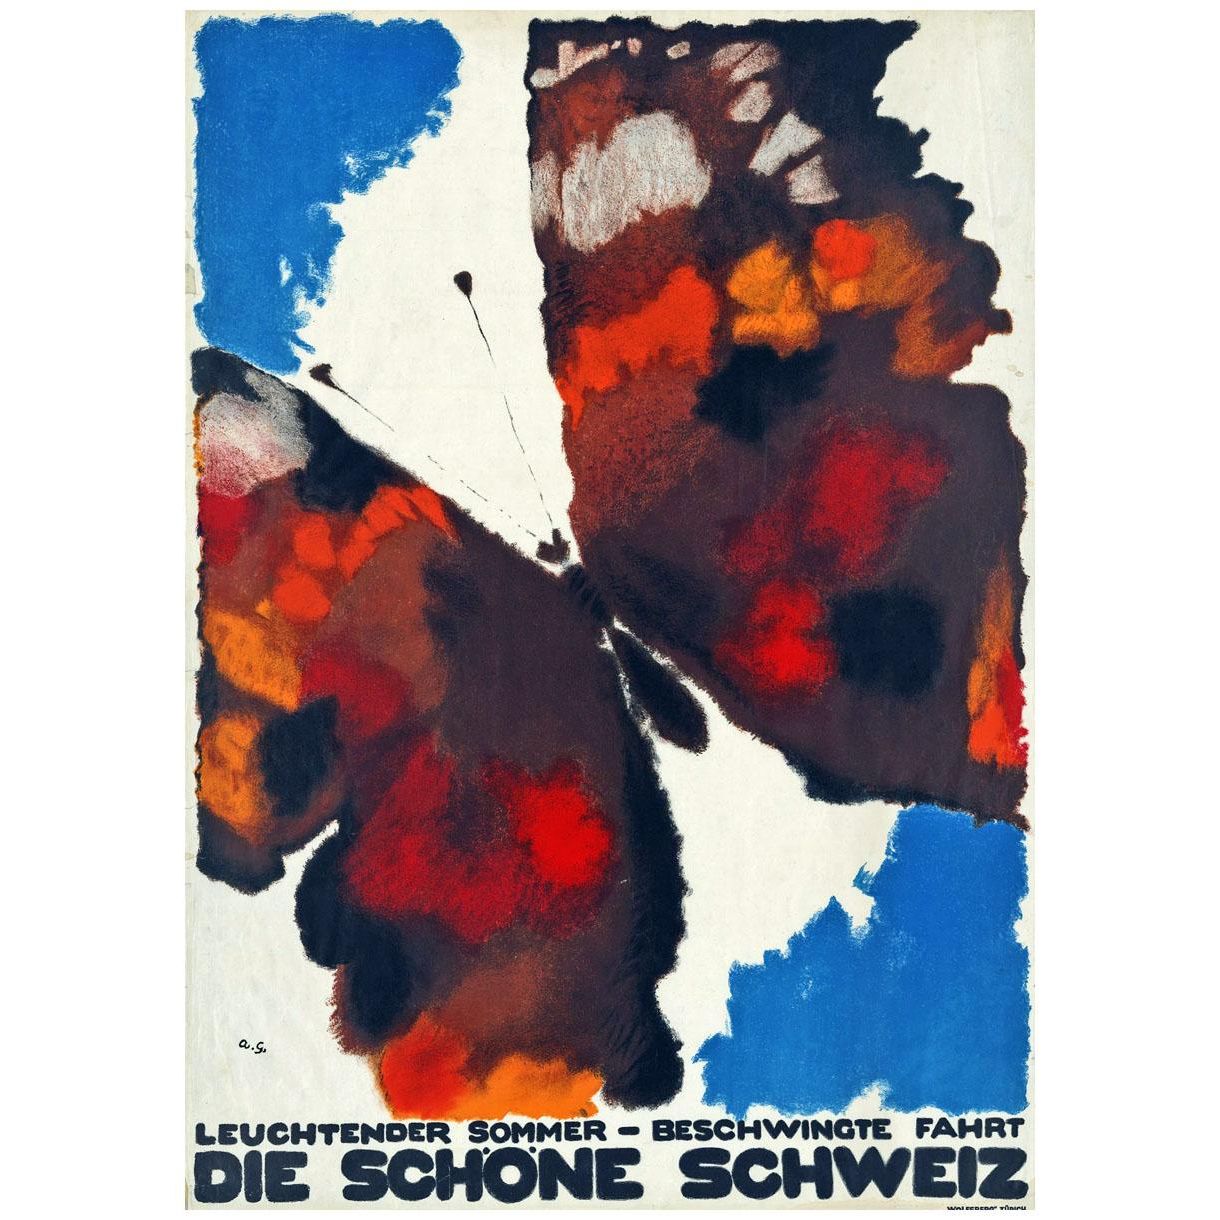 Augusto Giacometti. Die Schone Schweiz. Poster. 1930. Basel School of Design